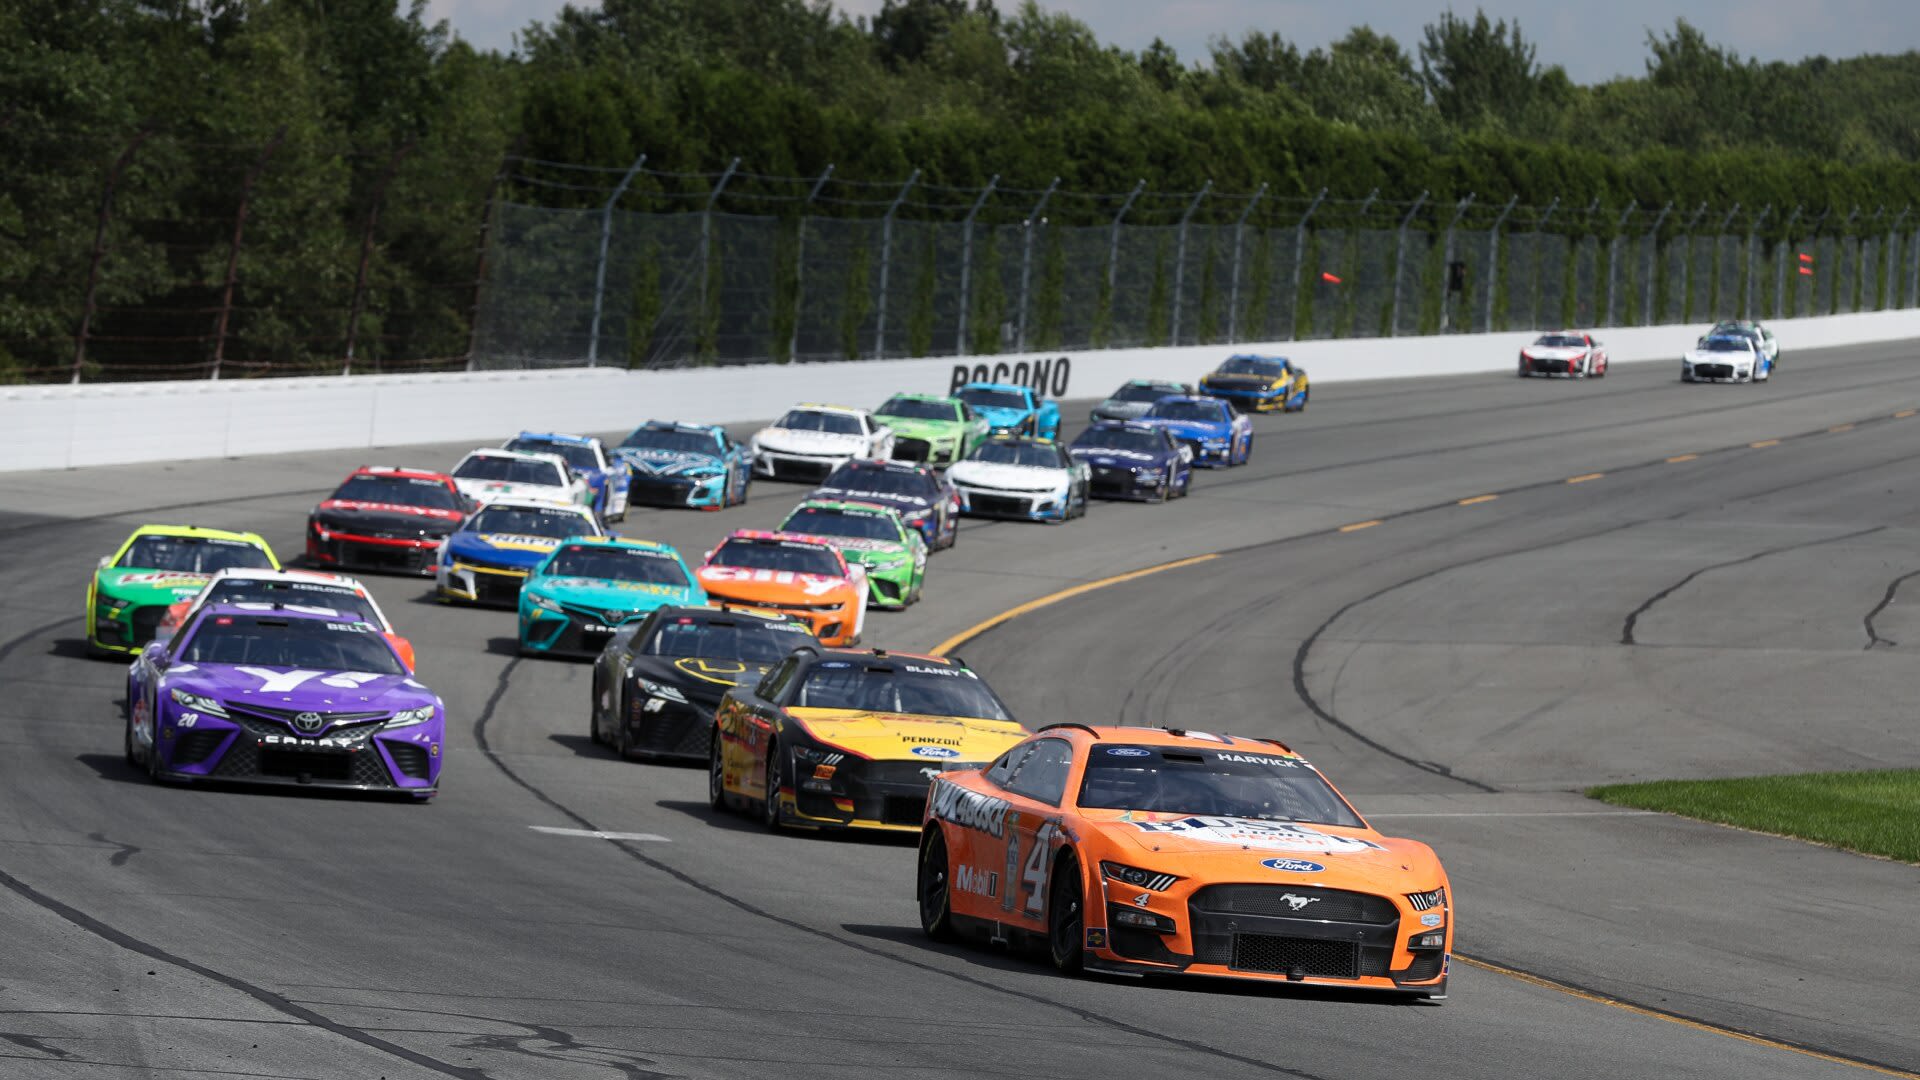 Pocono NASCAR Cup race: USA Network info, forecast, start time